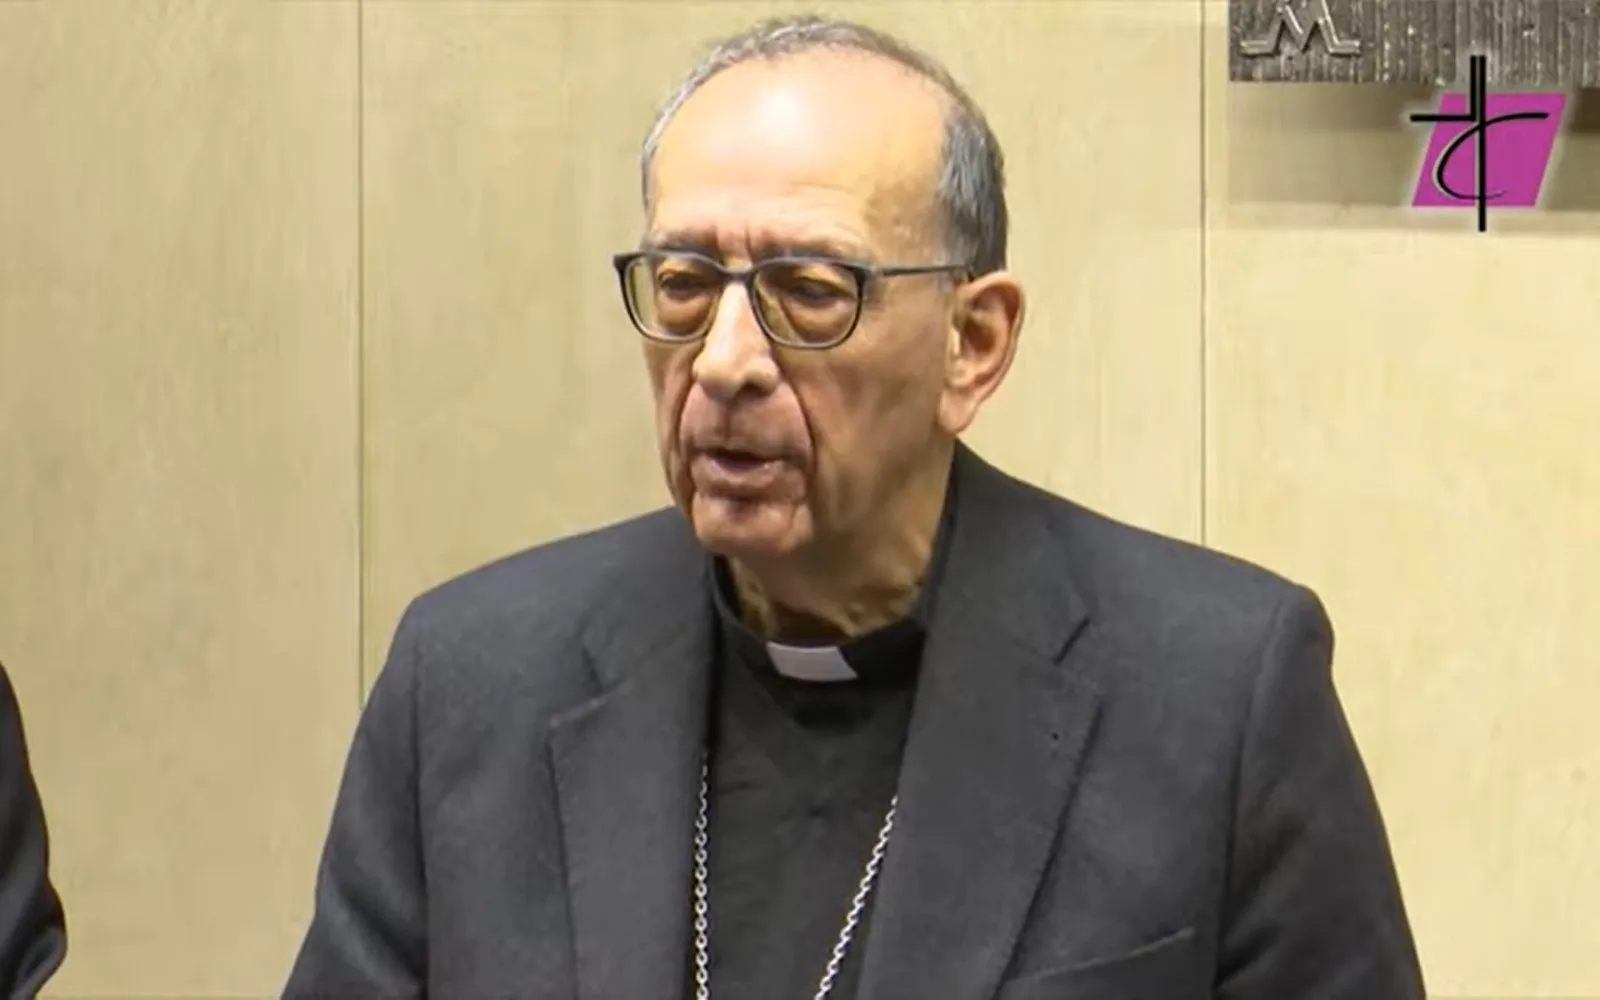 Cardenal Juan José Omella, Arzobispo de Barcelona.?w=200&h=150